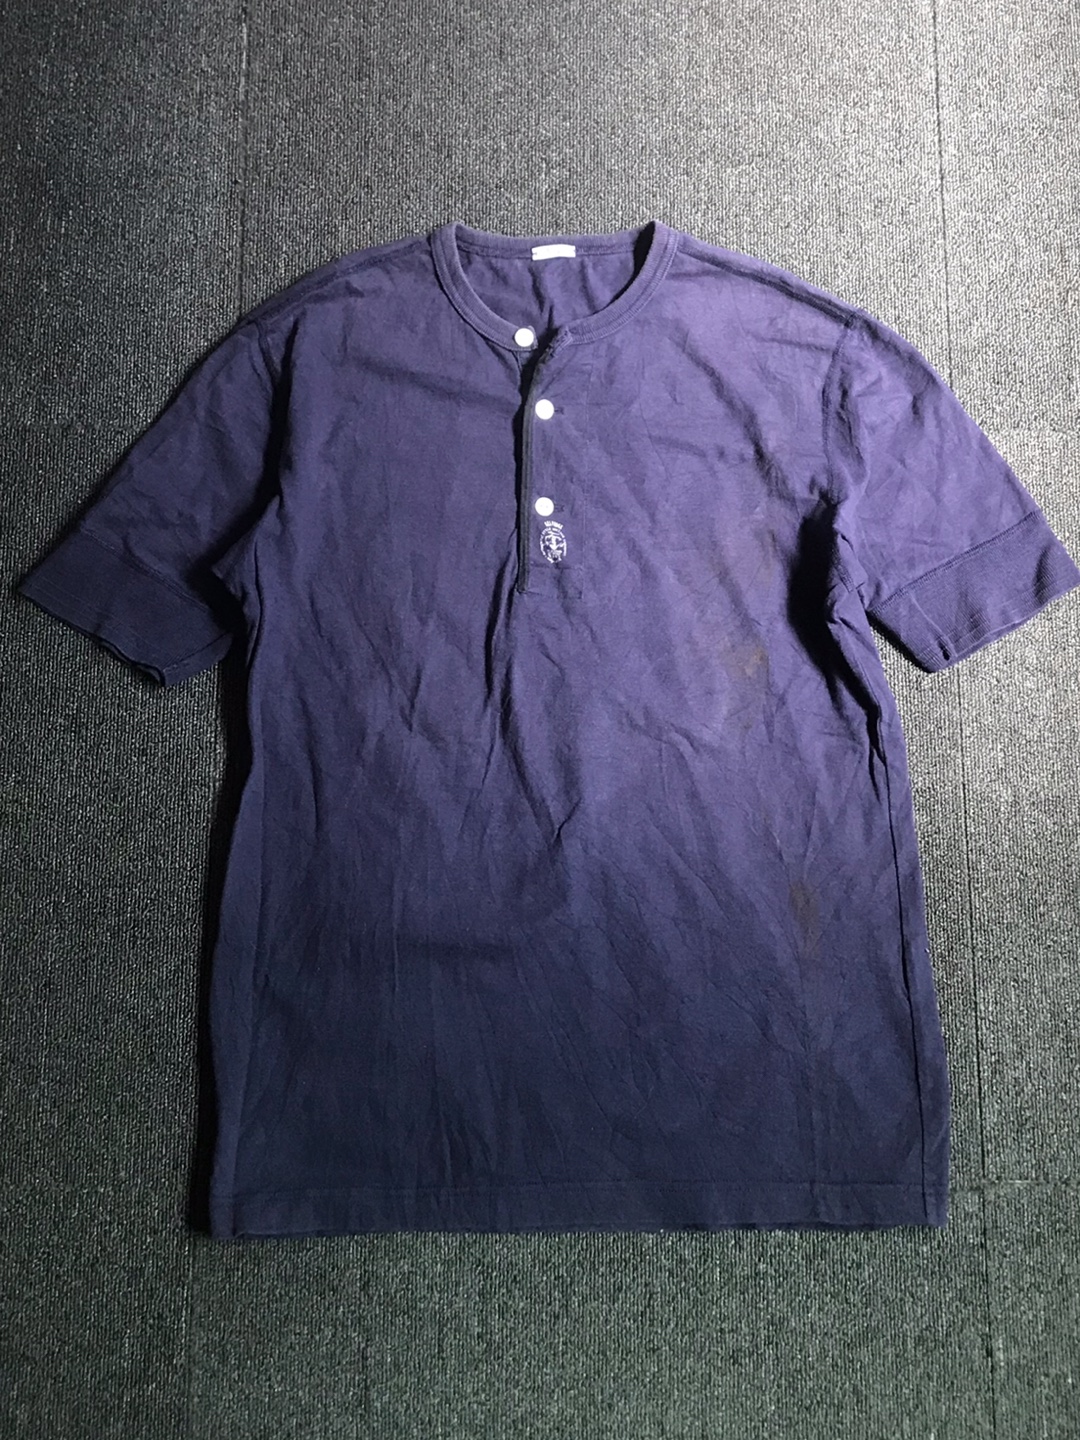 Navy vtg style garments henley neck tee (48 size, ~100 추천)